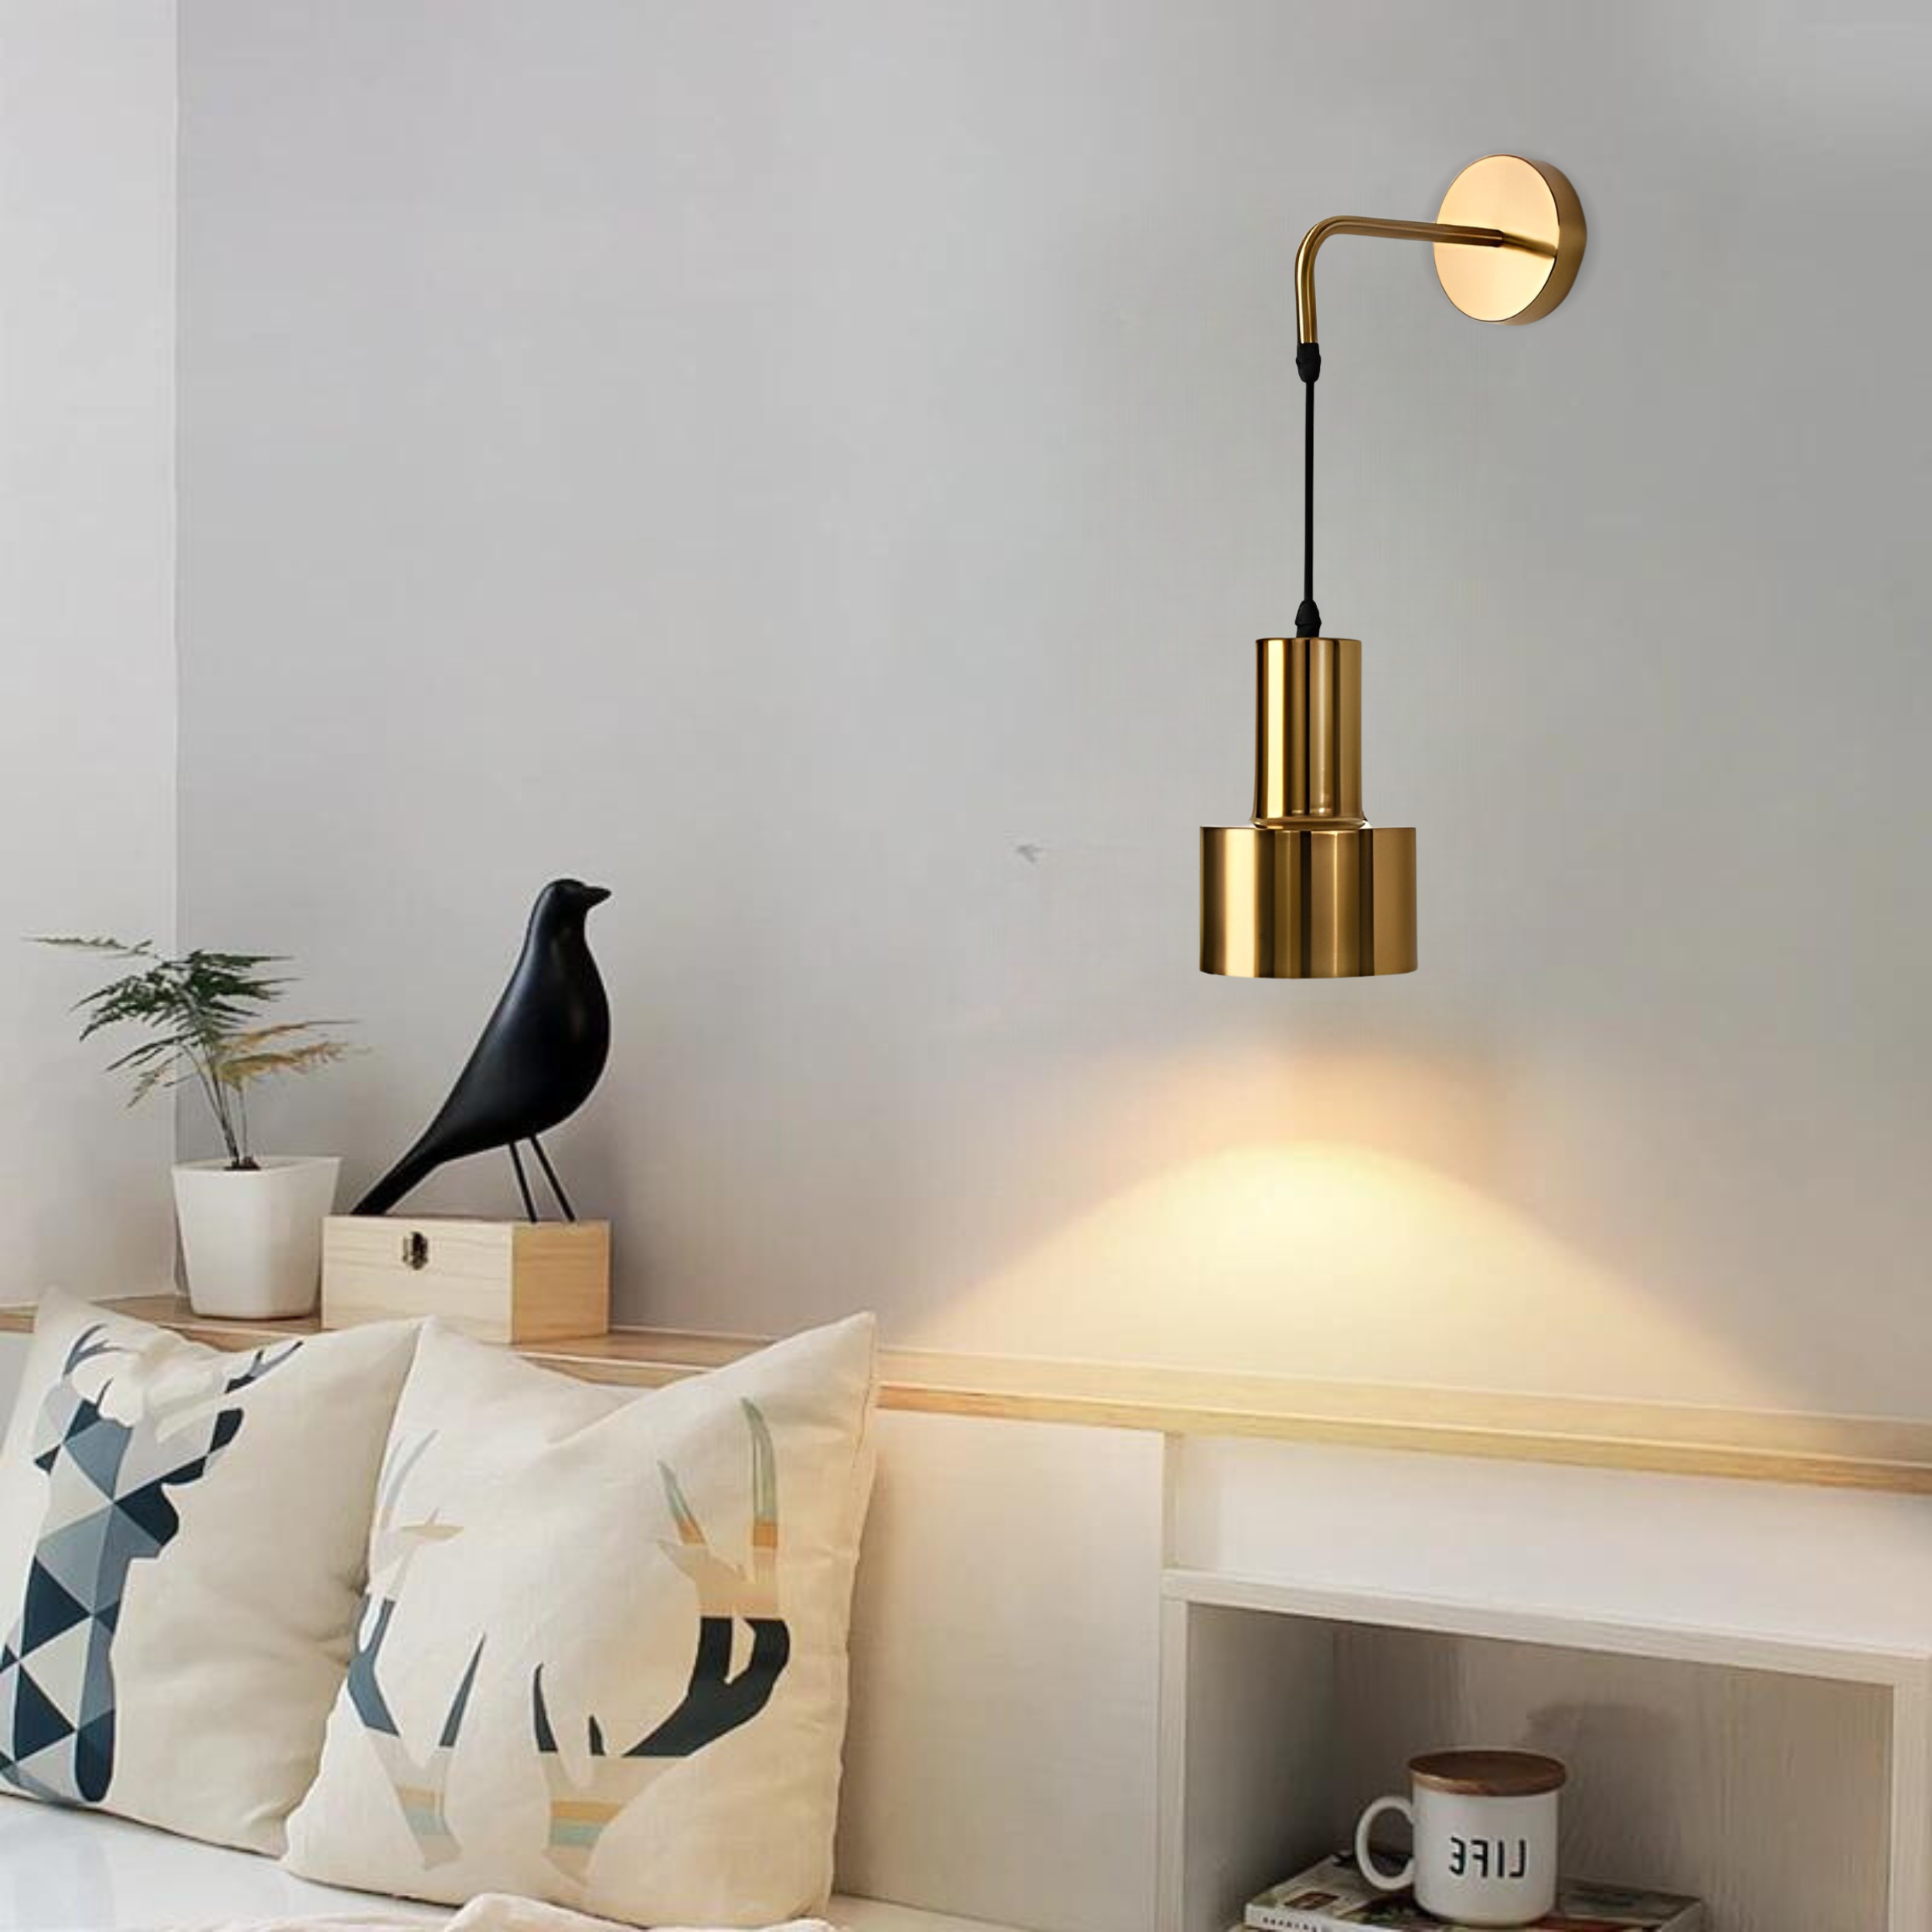 WL-B0036 Premium Decorative Metal Led Wall Lamp E27 Beside Lamp for Home Stairs, Lamp, bedroom, Corridor, Hallway (Single Piece)